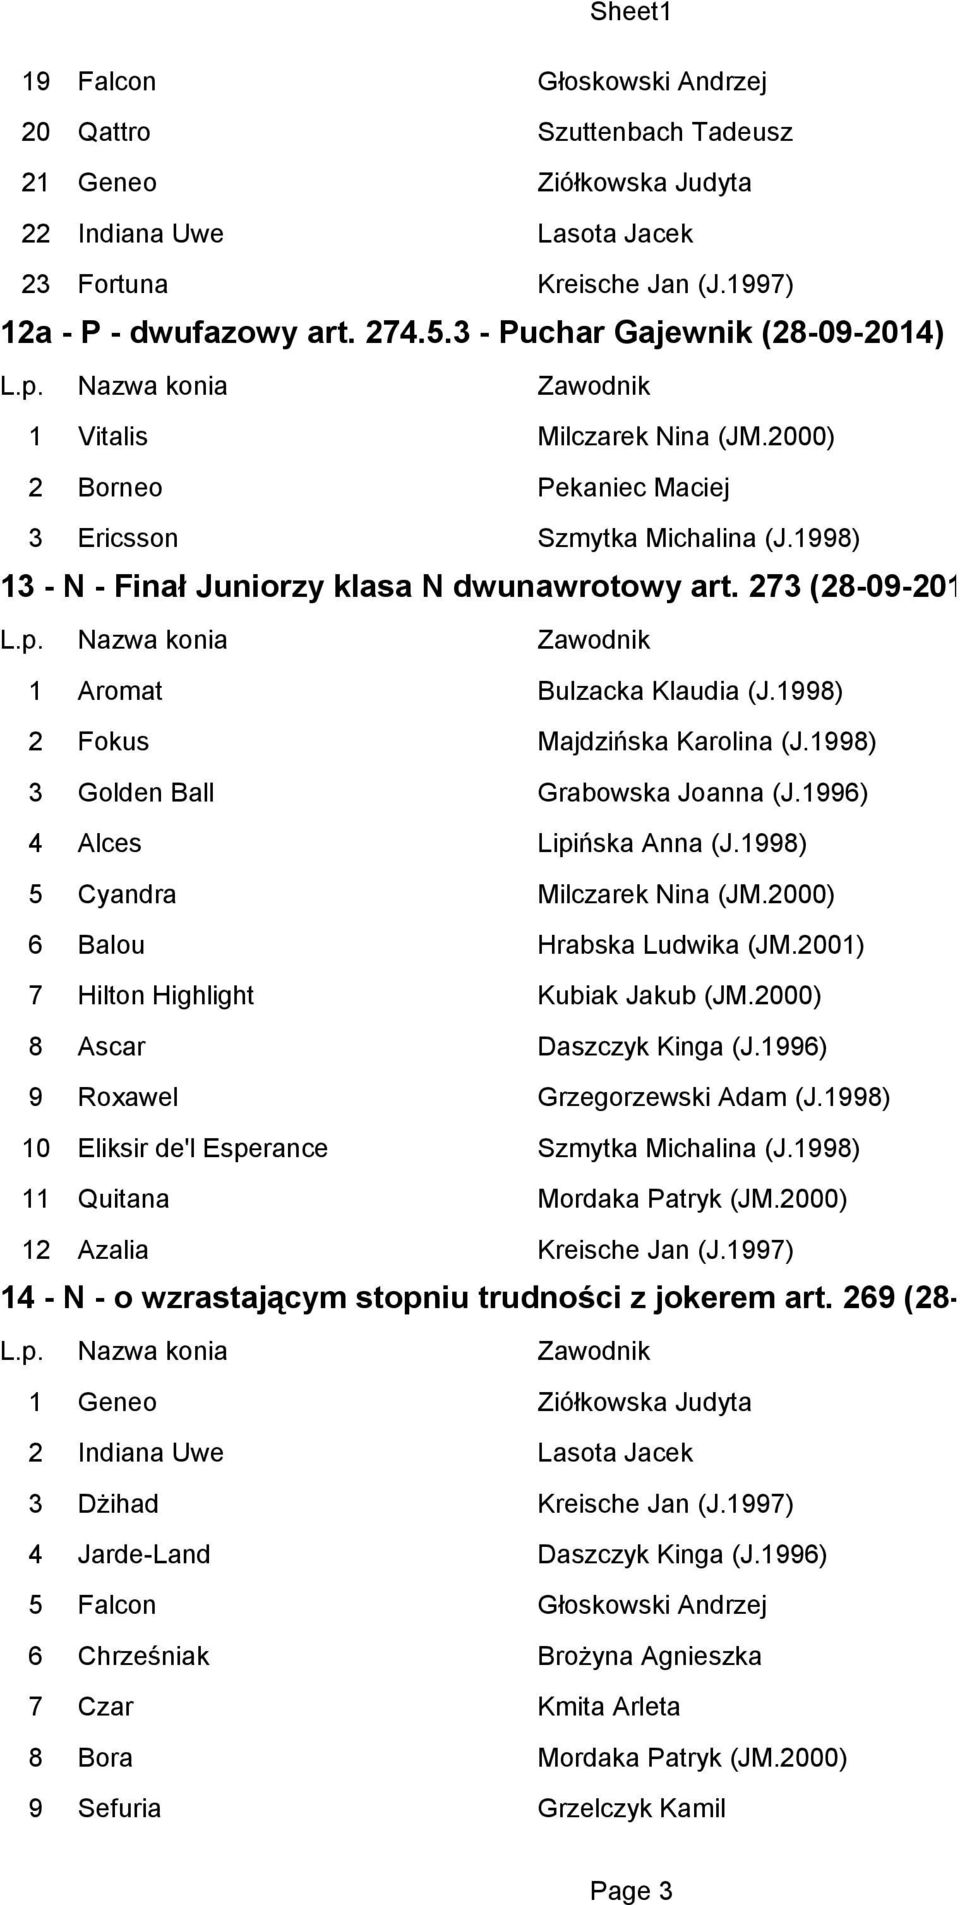 273 (28-09-2014) 1 Aromat Bulzacka Klaudia (J.1998) 2 Fokus Majdzińska Karolina (J.1998) 3 Golden Ball Grabowska Joanna (J.1996) 4 Alces Lipińska Anna (J.1998) 5 Cyandra Milczarek Nina (JM.